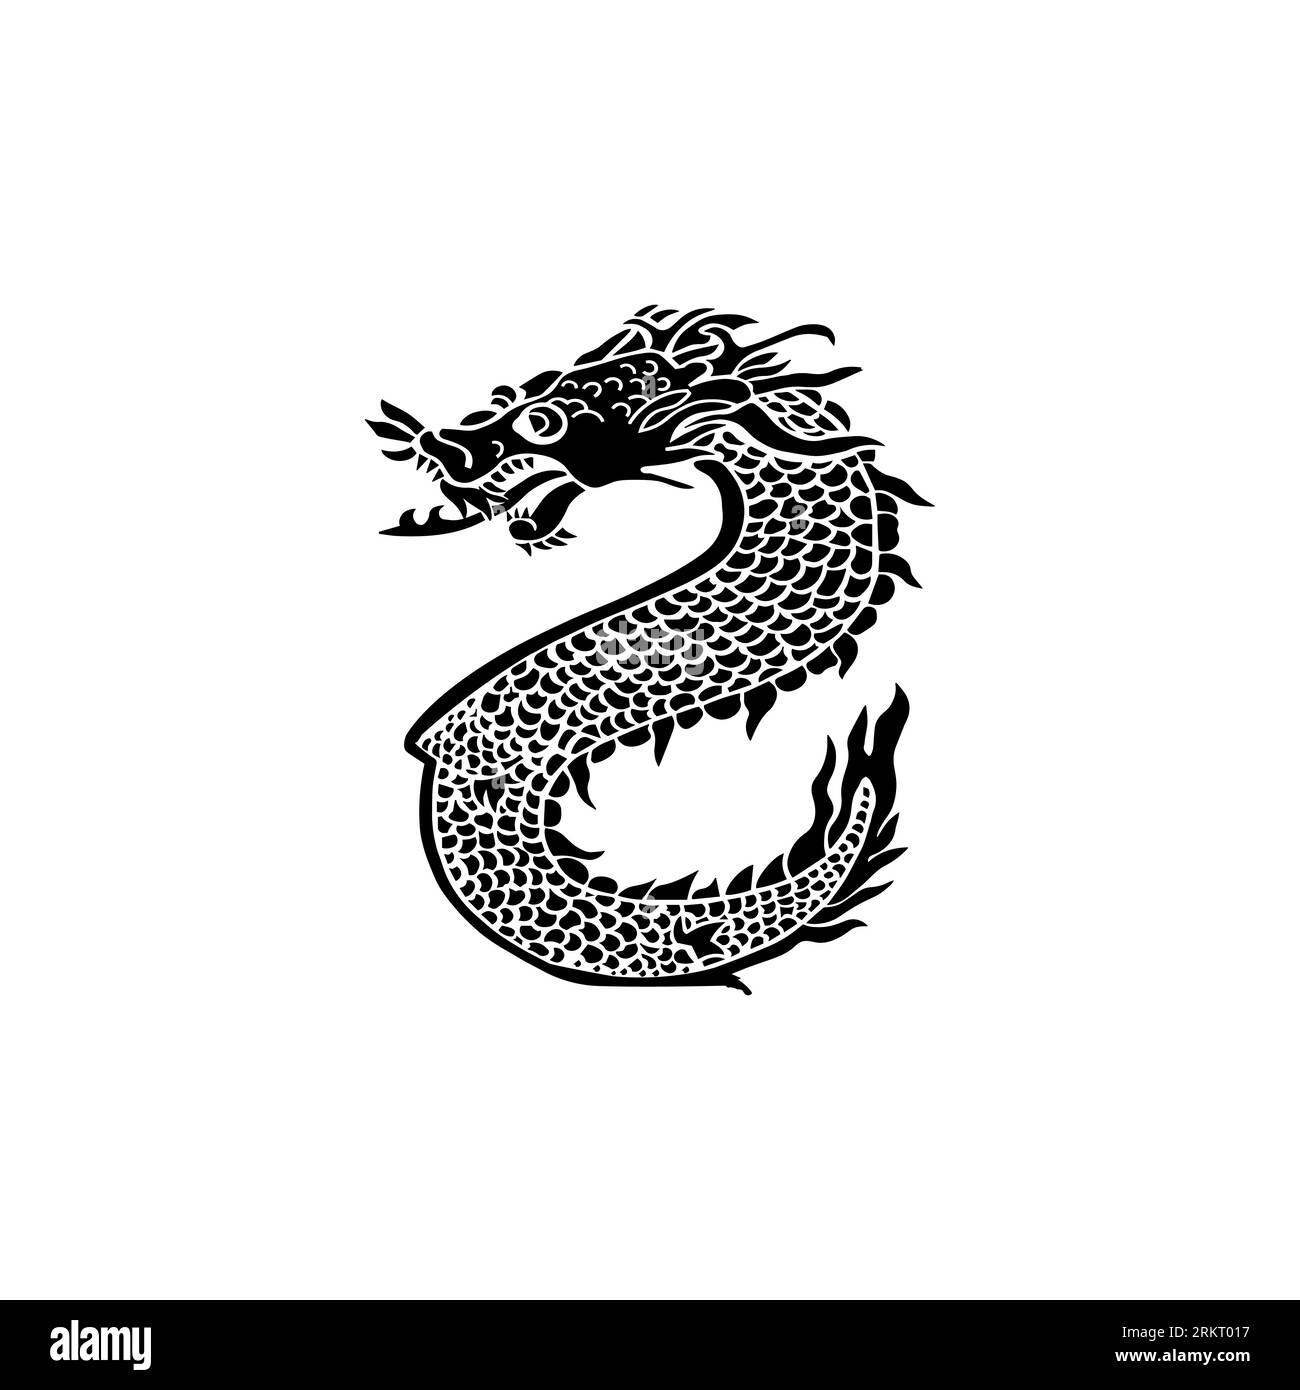 Dragon tattoo vector illustration Stock Vector Image & Art - Alamy